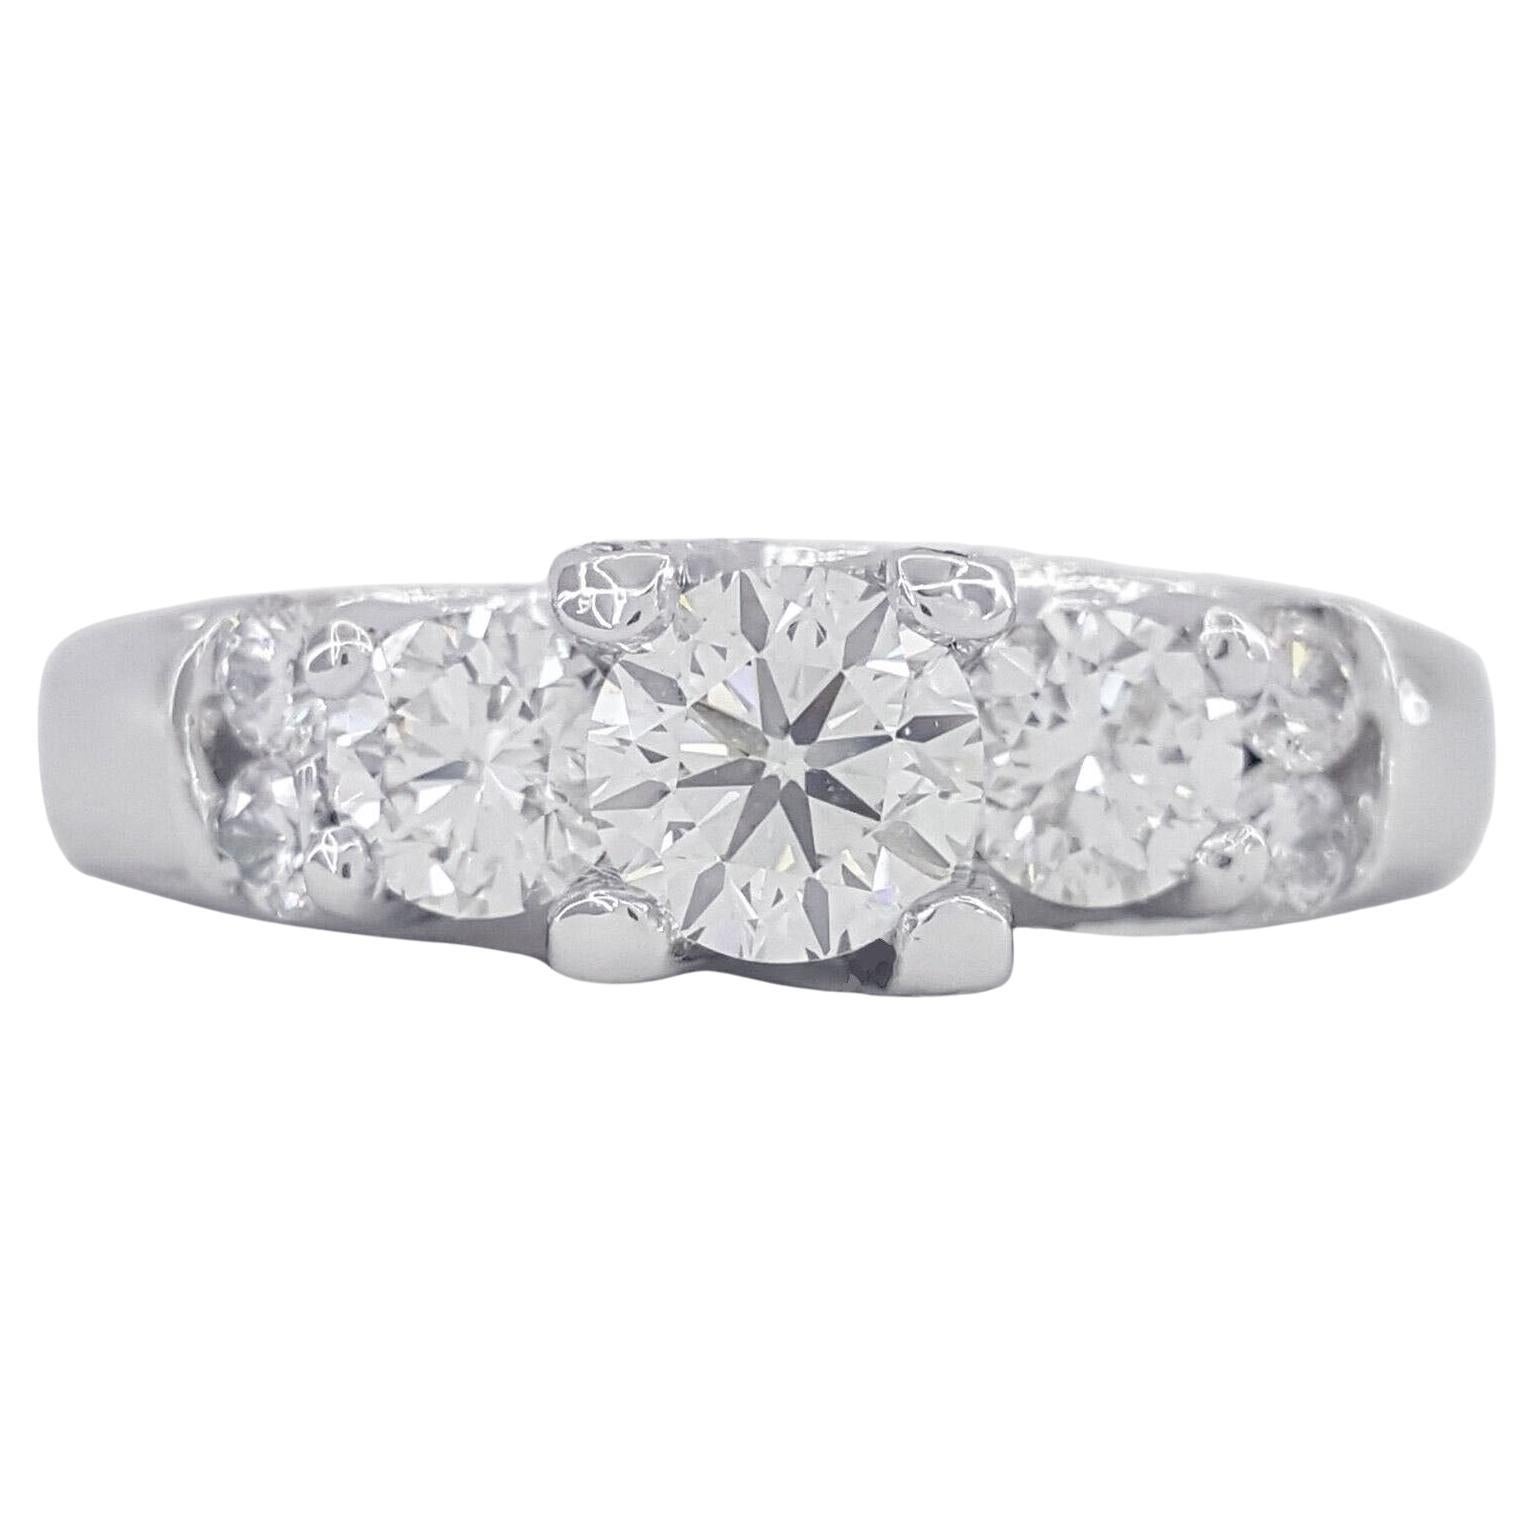 Three 3-Stone Round Brilliant Cut Diamond Engagement Ring